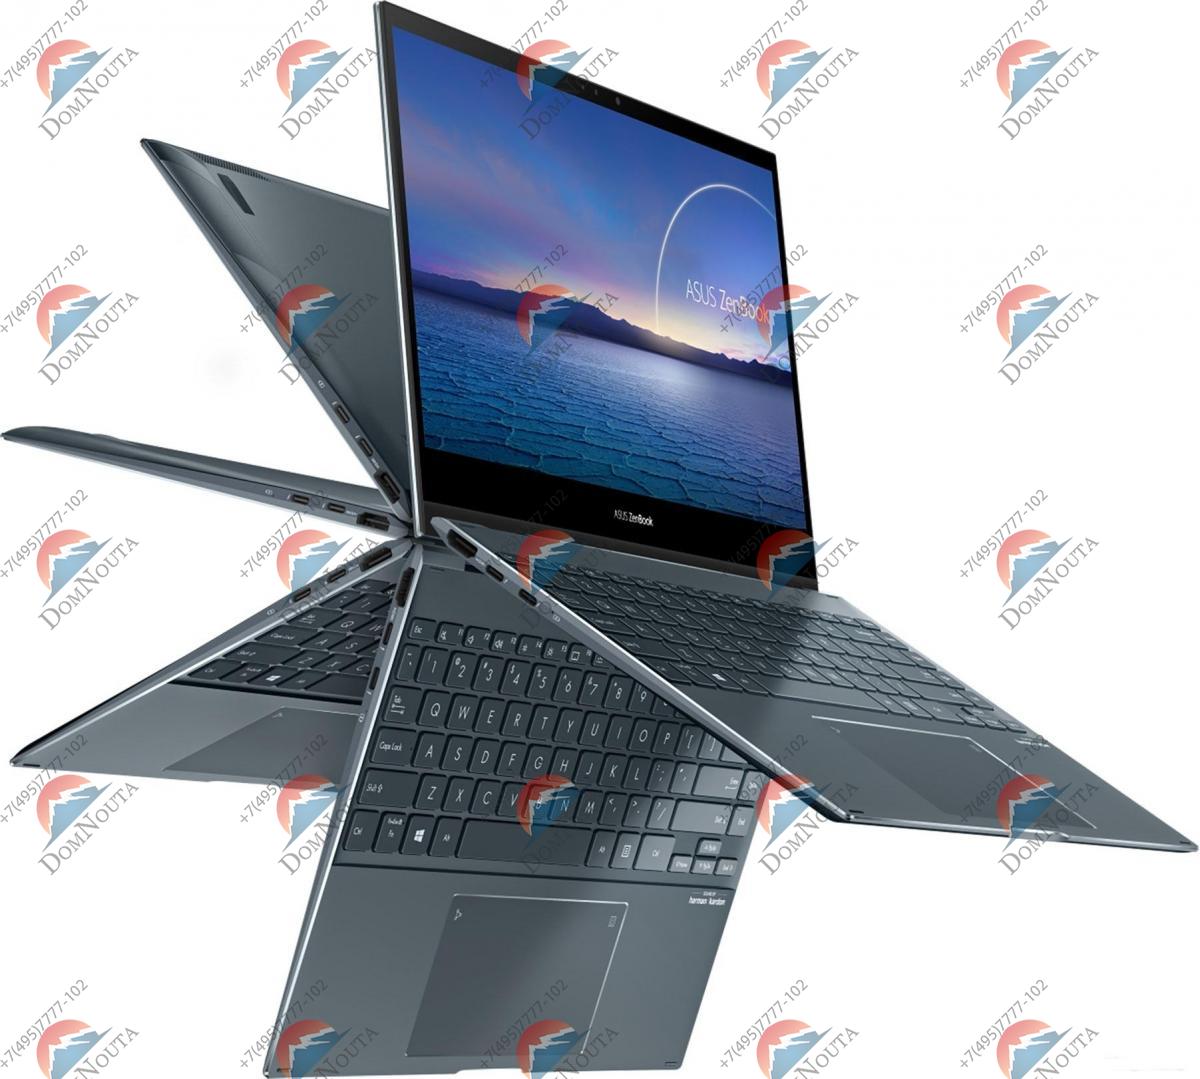 Ноутбук Asus ZENBOOK Flip UX363Ja